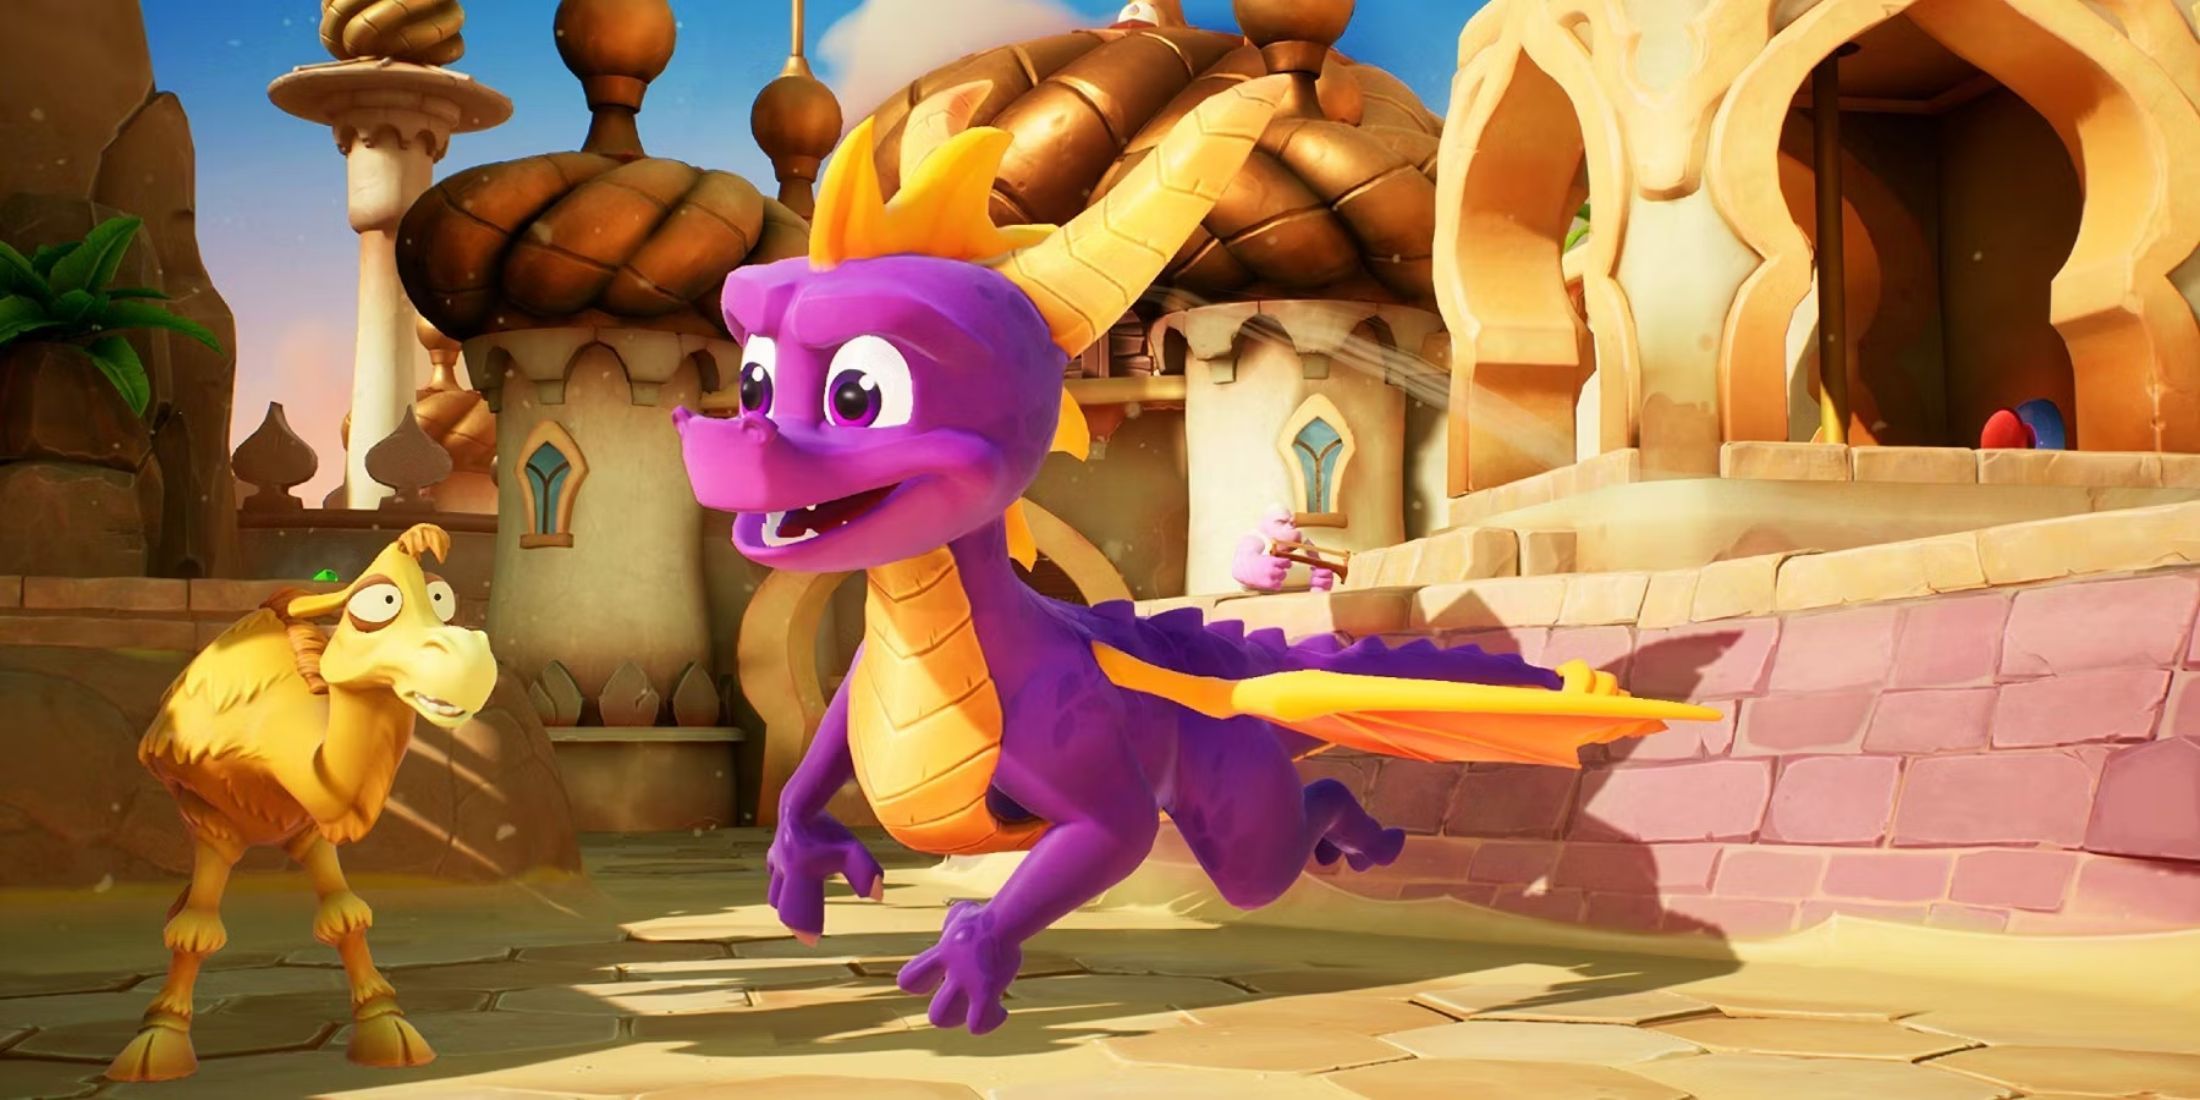 Spyro gliding in Spyro 2: Ripto's Rage